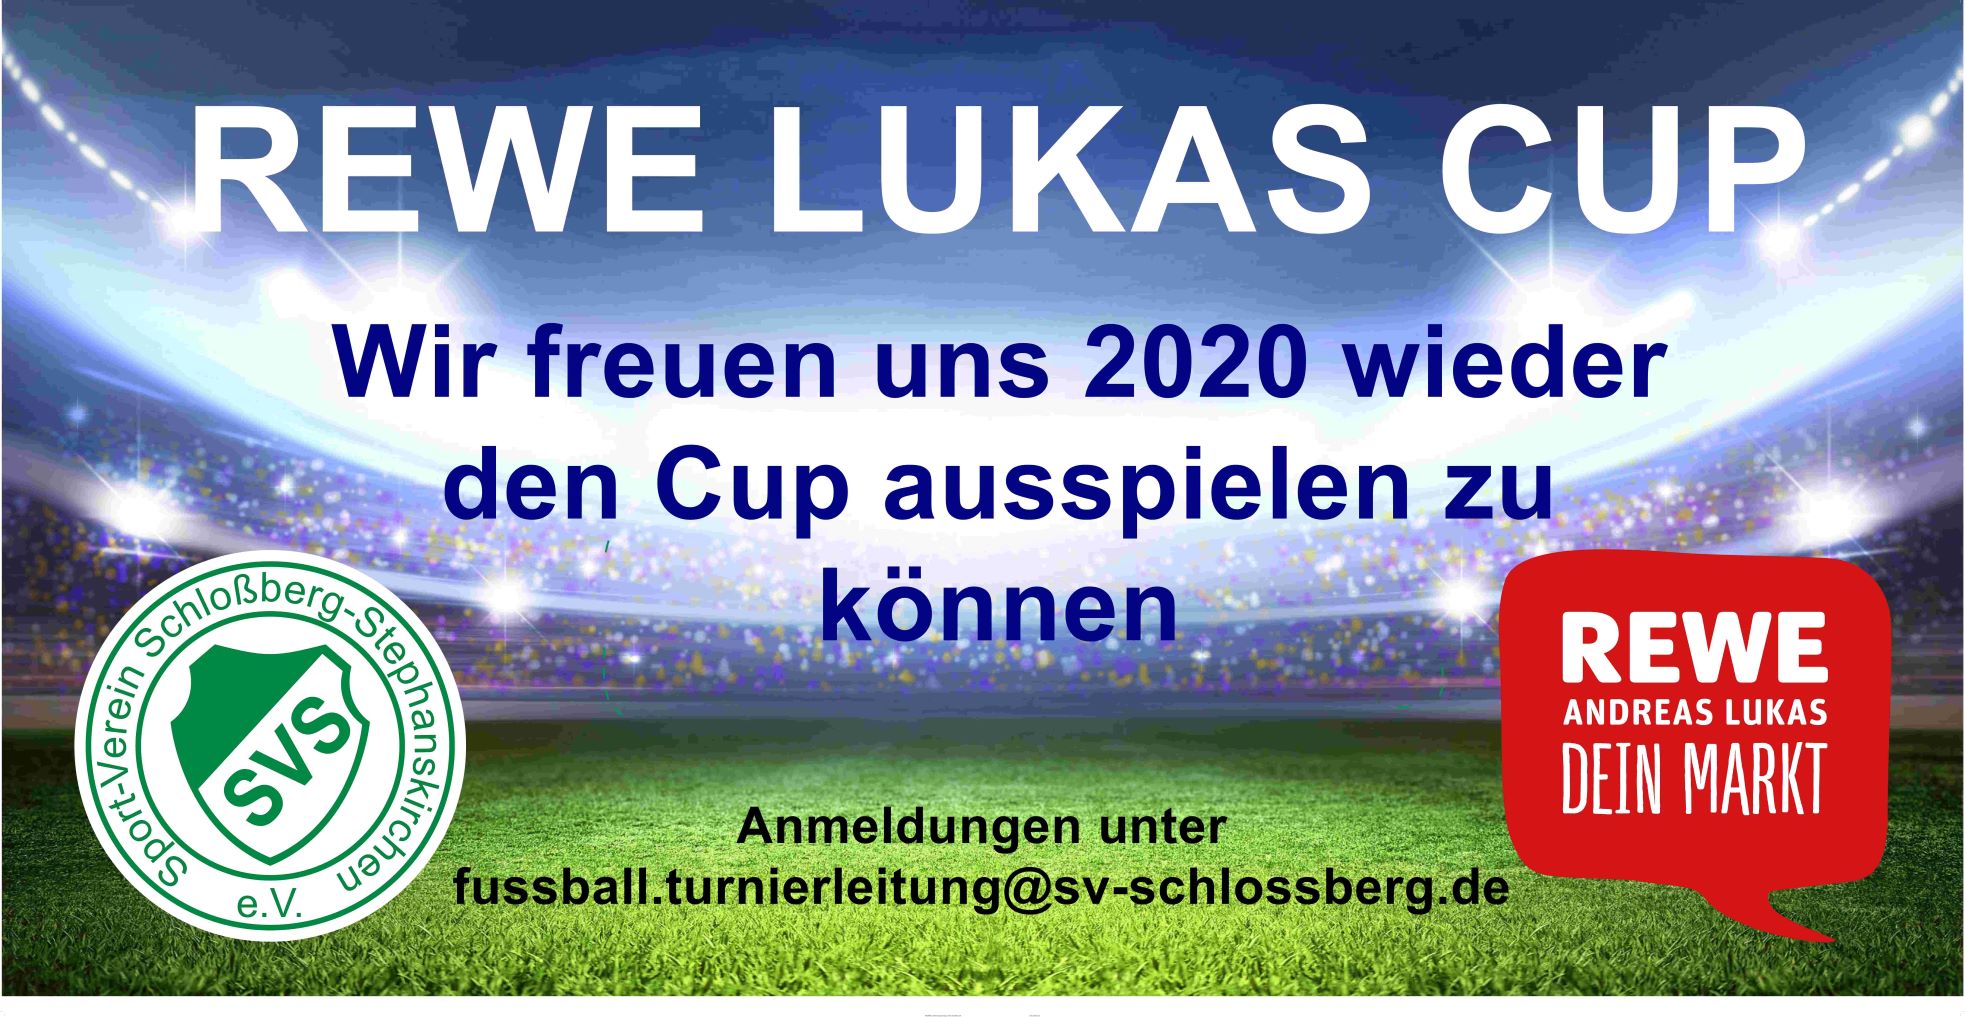 REWE LUKAS CUP 2020